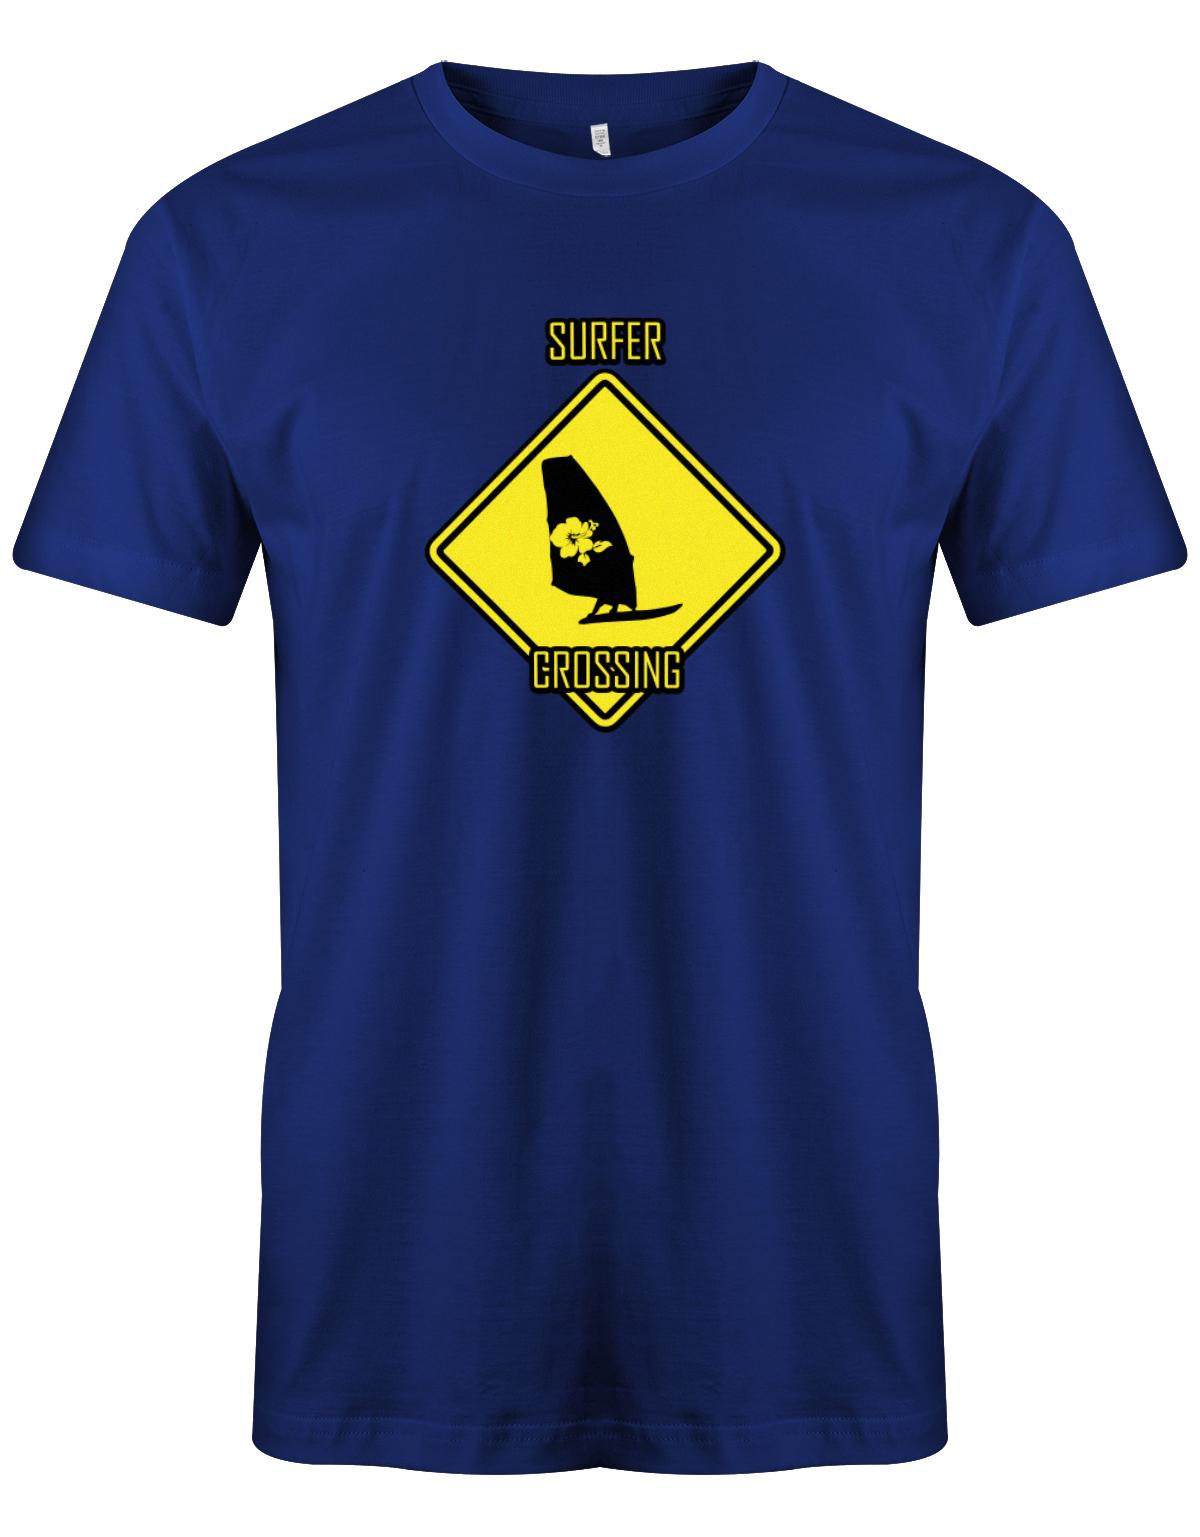 Surfer t-shirt bedruckt mit Achtung Surfer Crossing  Royalblau